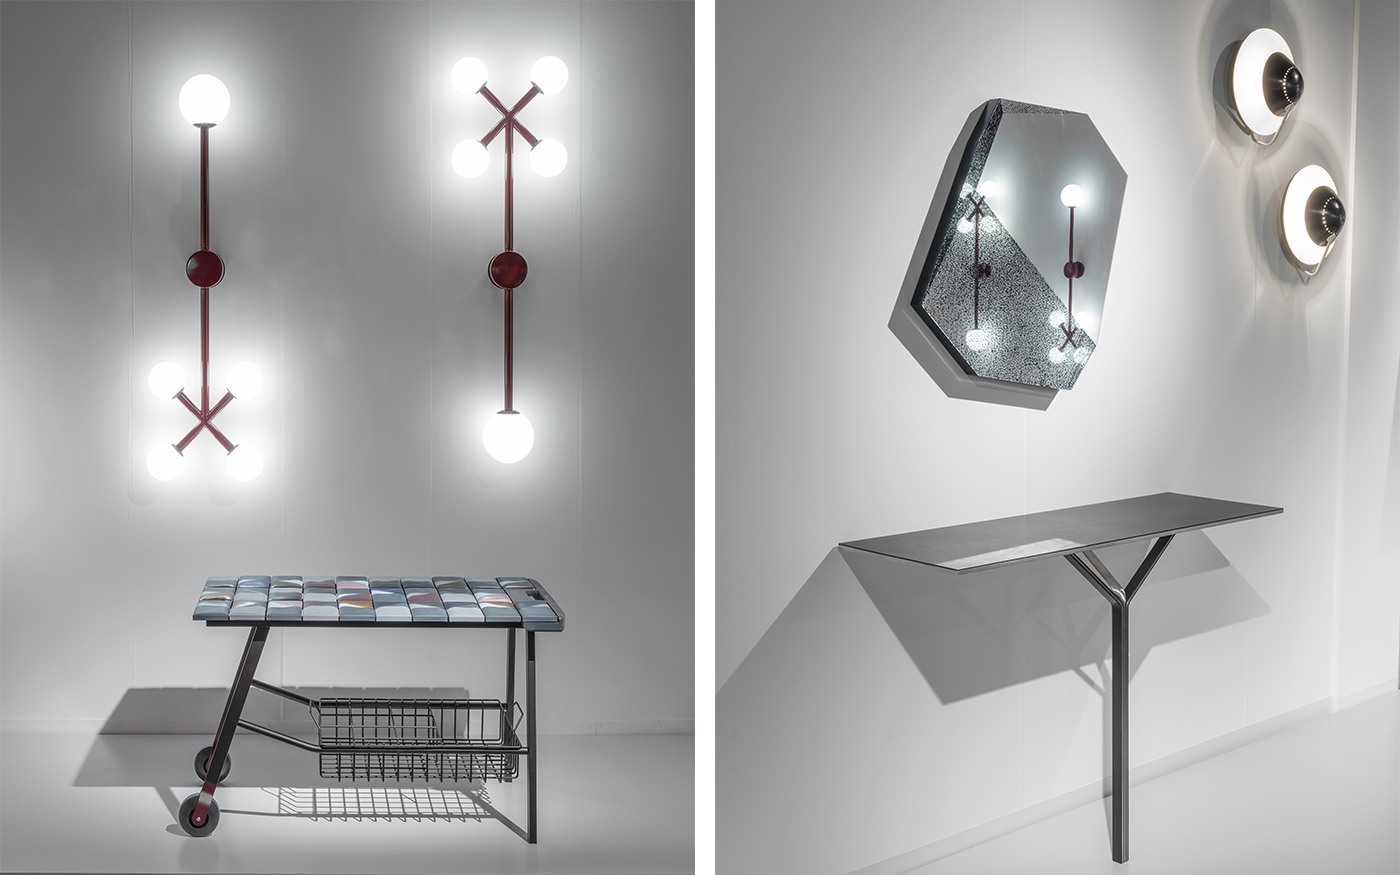 Gino Sarfatti - Design Miami / Basel 2018